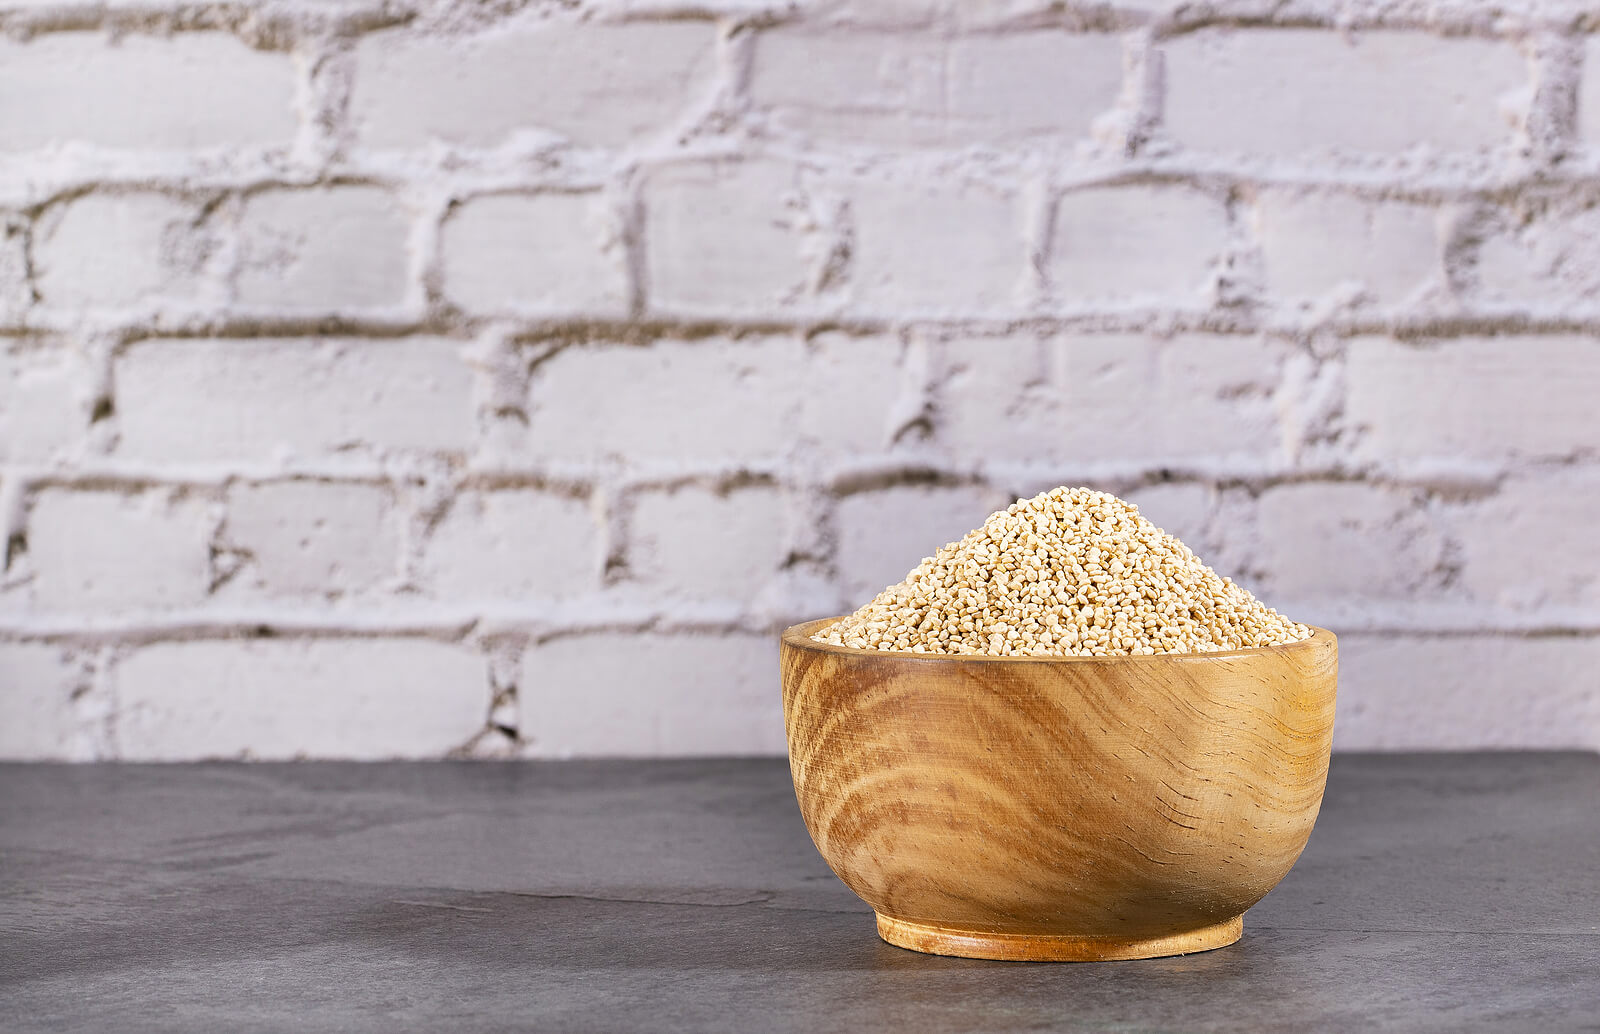 The Buddha bowl contains quinoa.